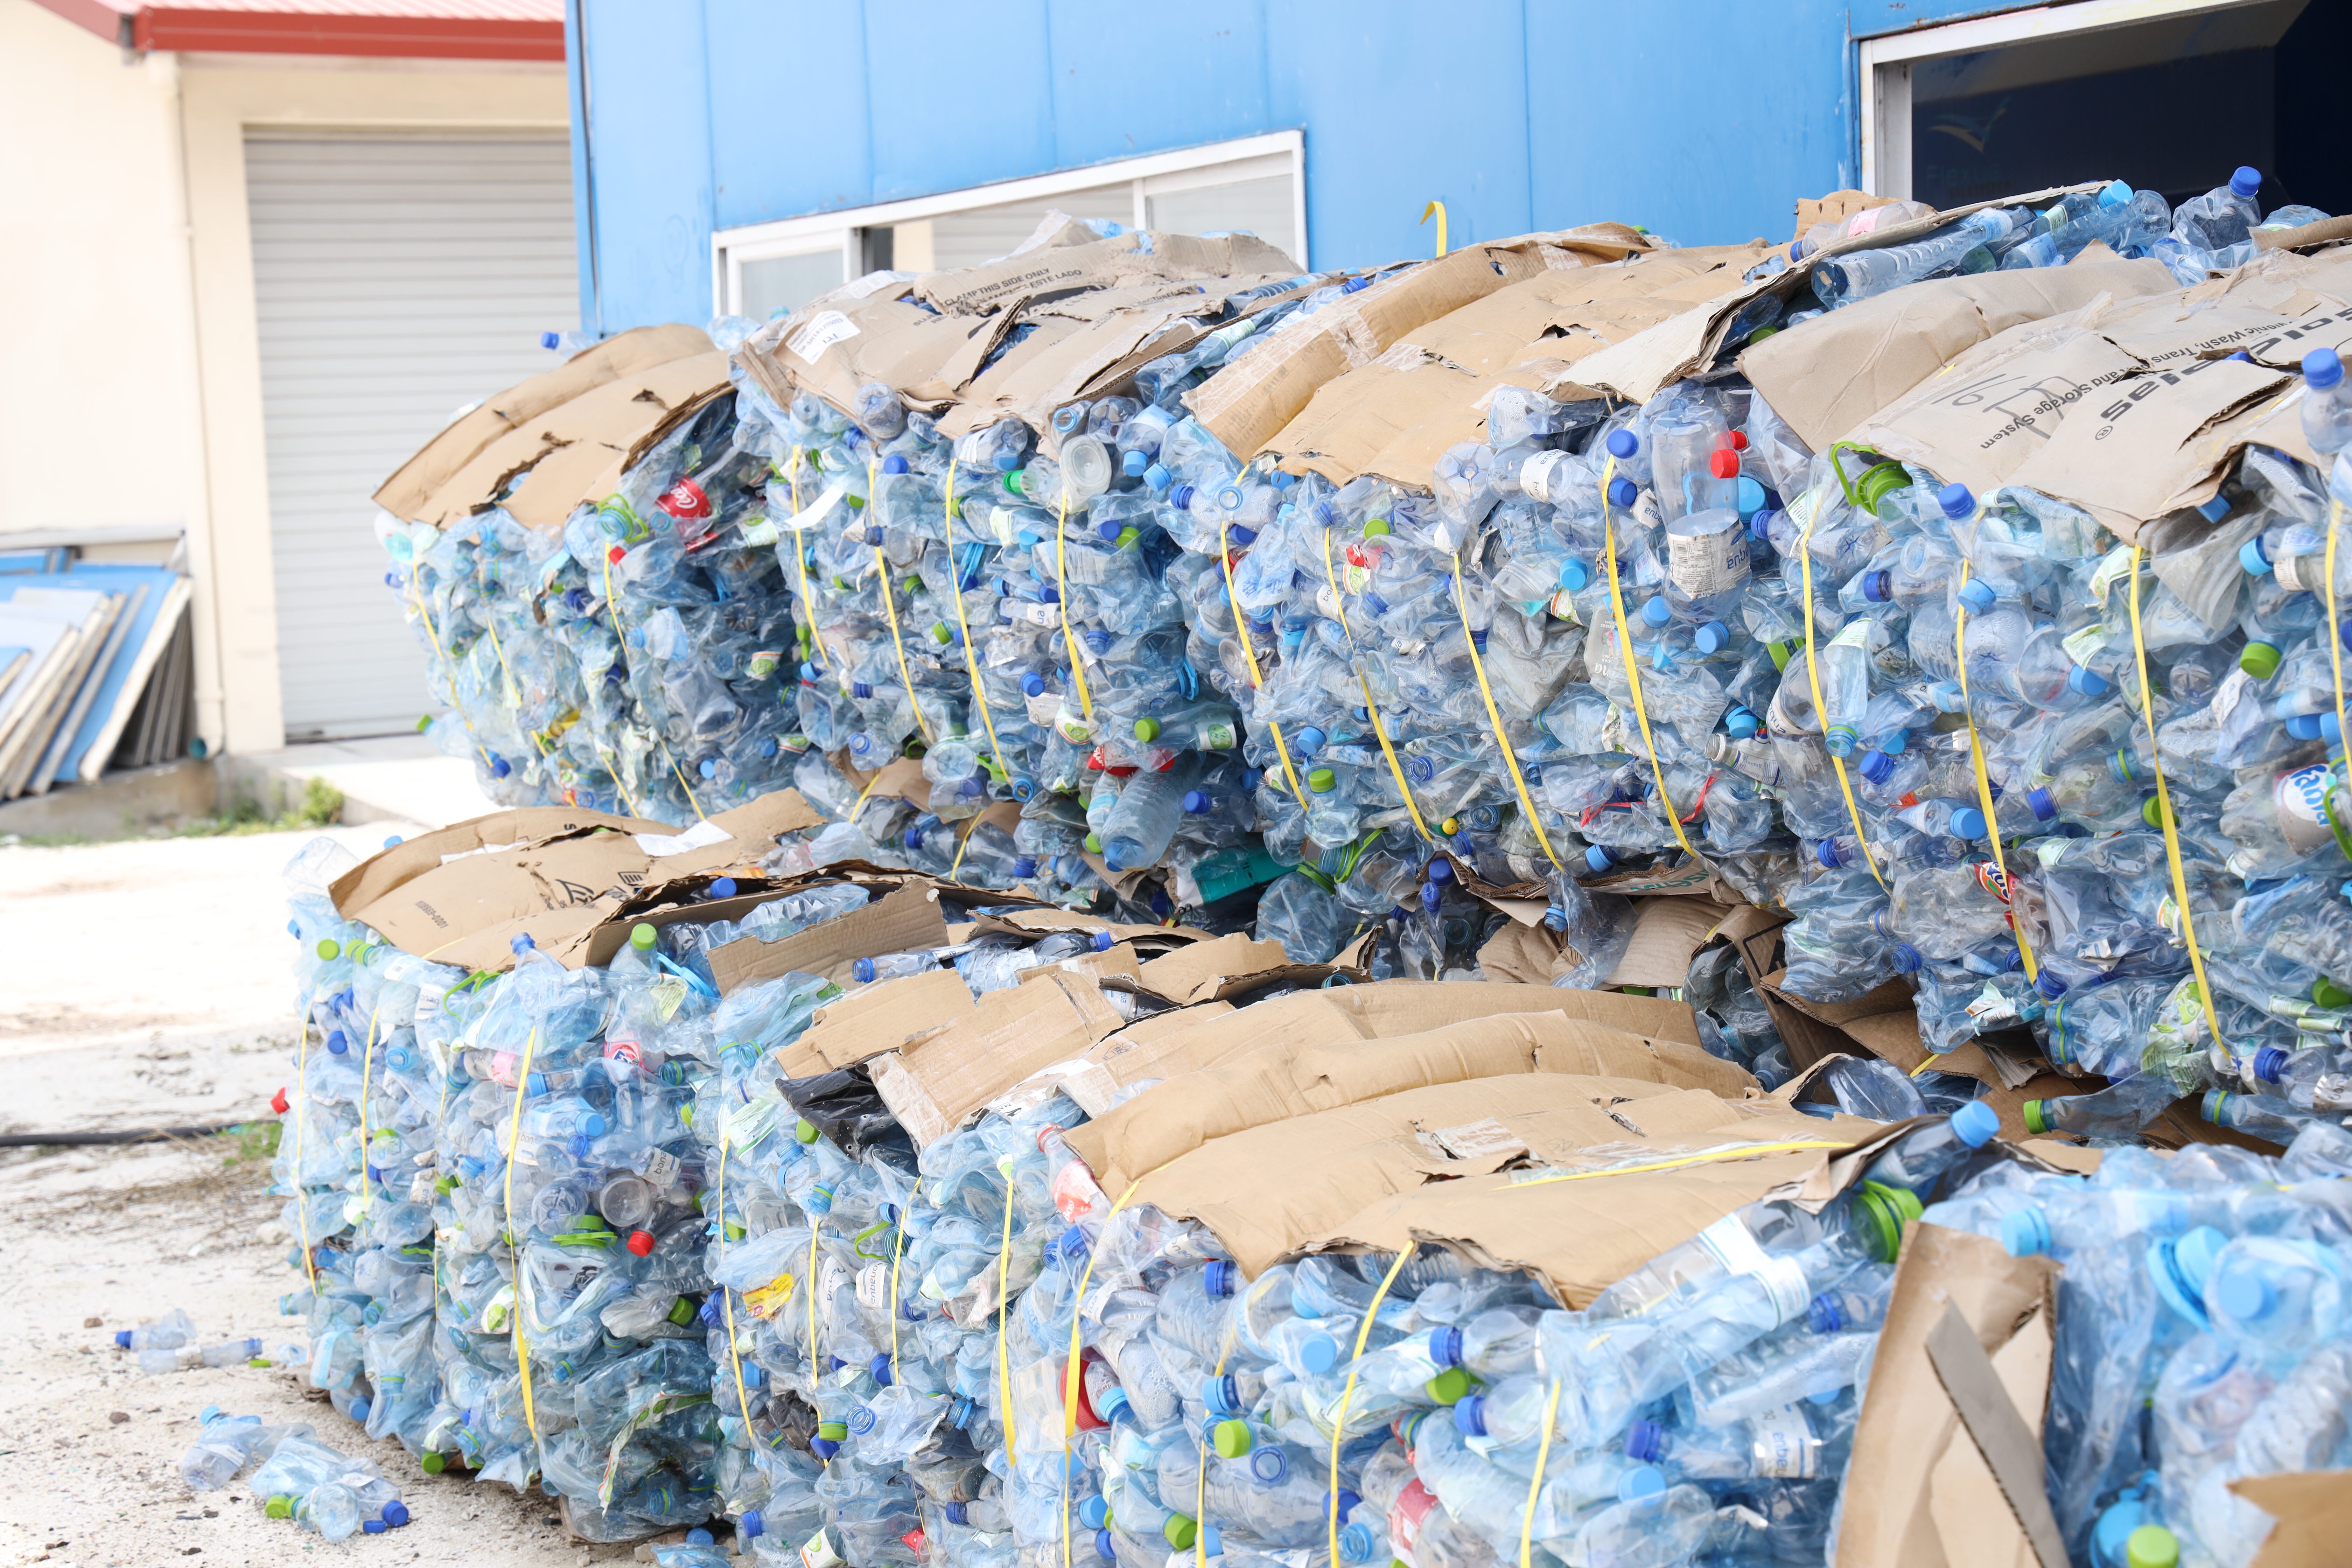 New episode of the circular waste management series webinar focusing on plastics